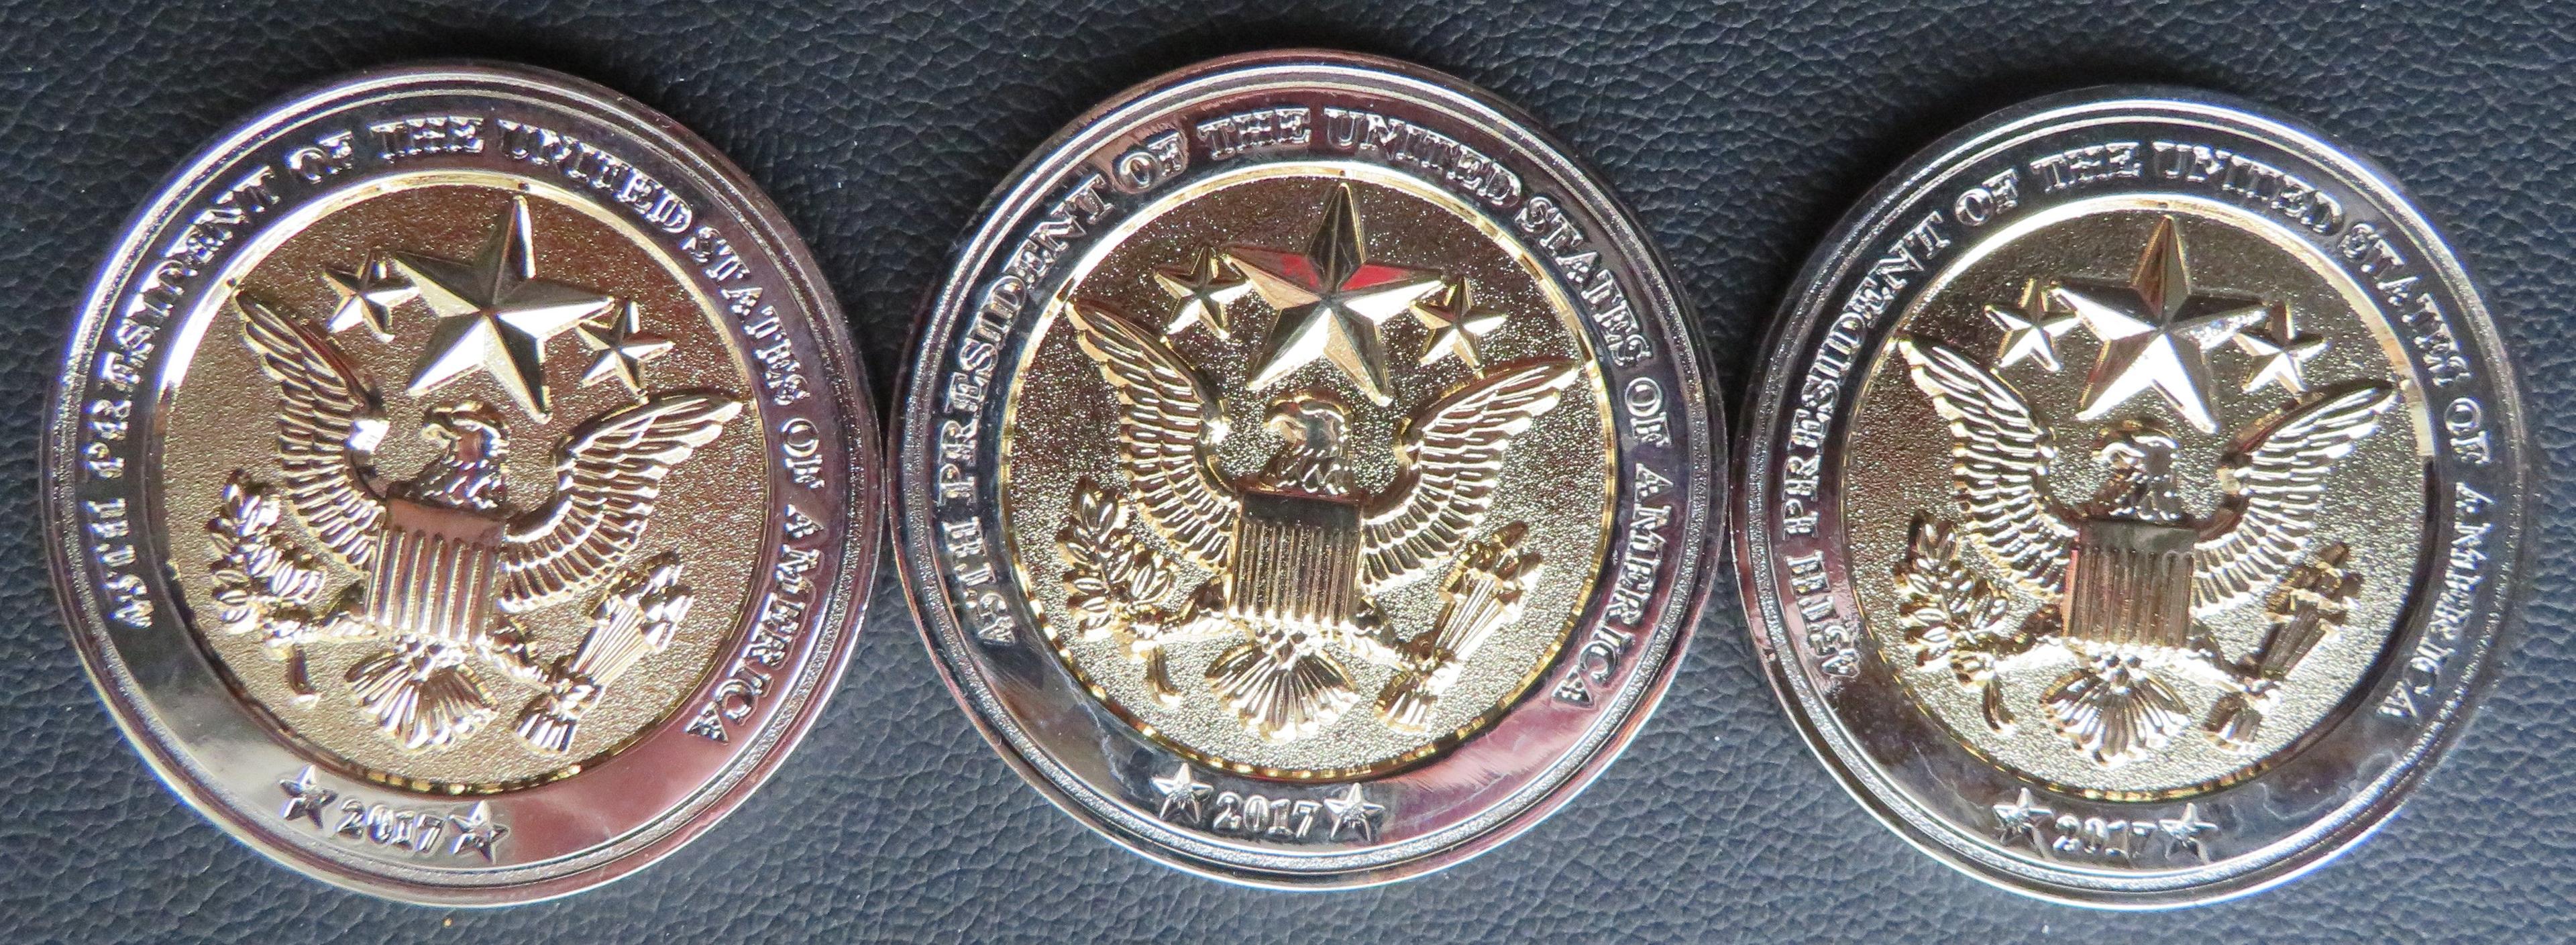 (3) 2017- Donald Trump Coins